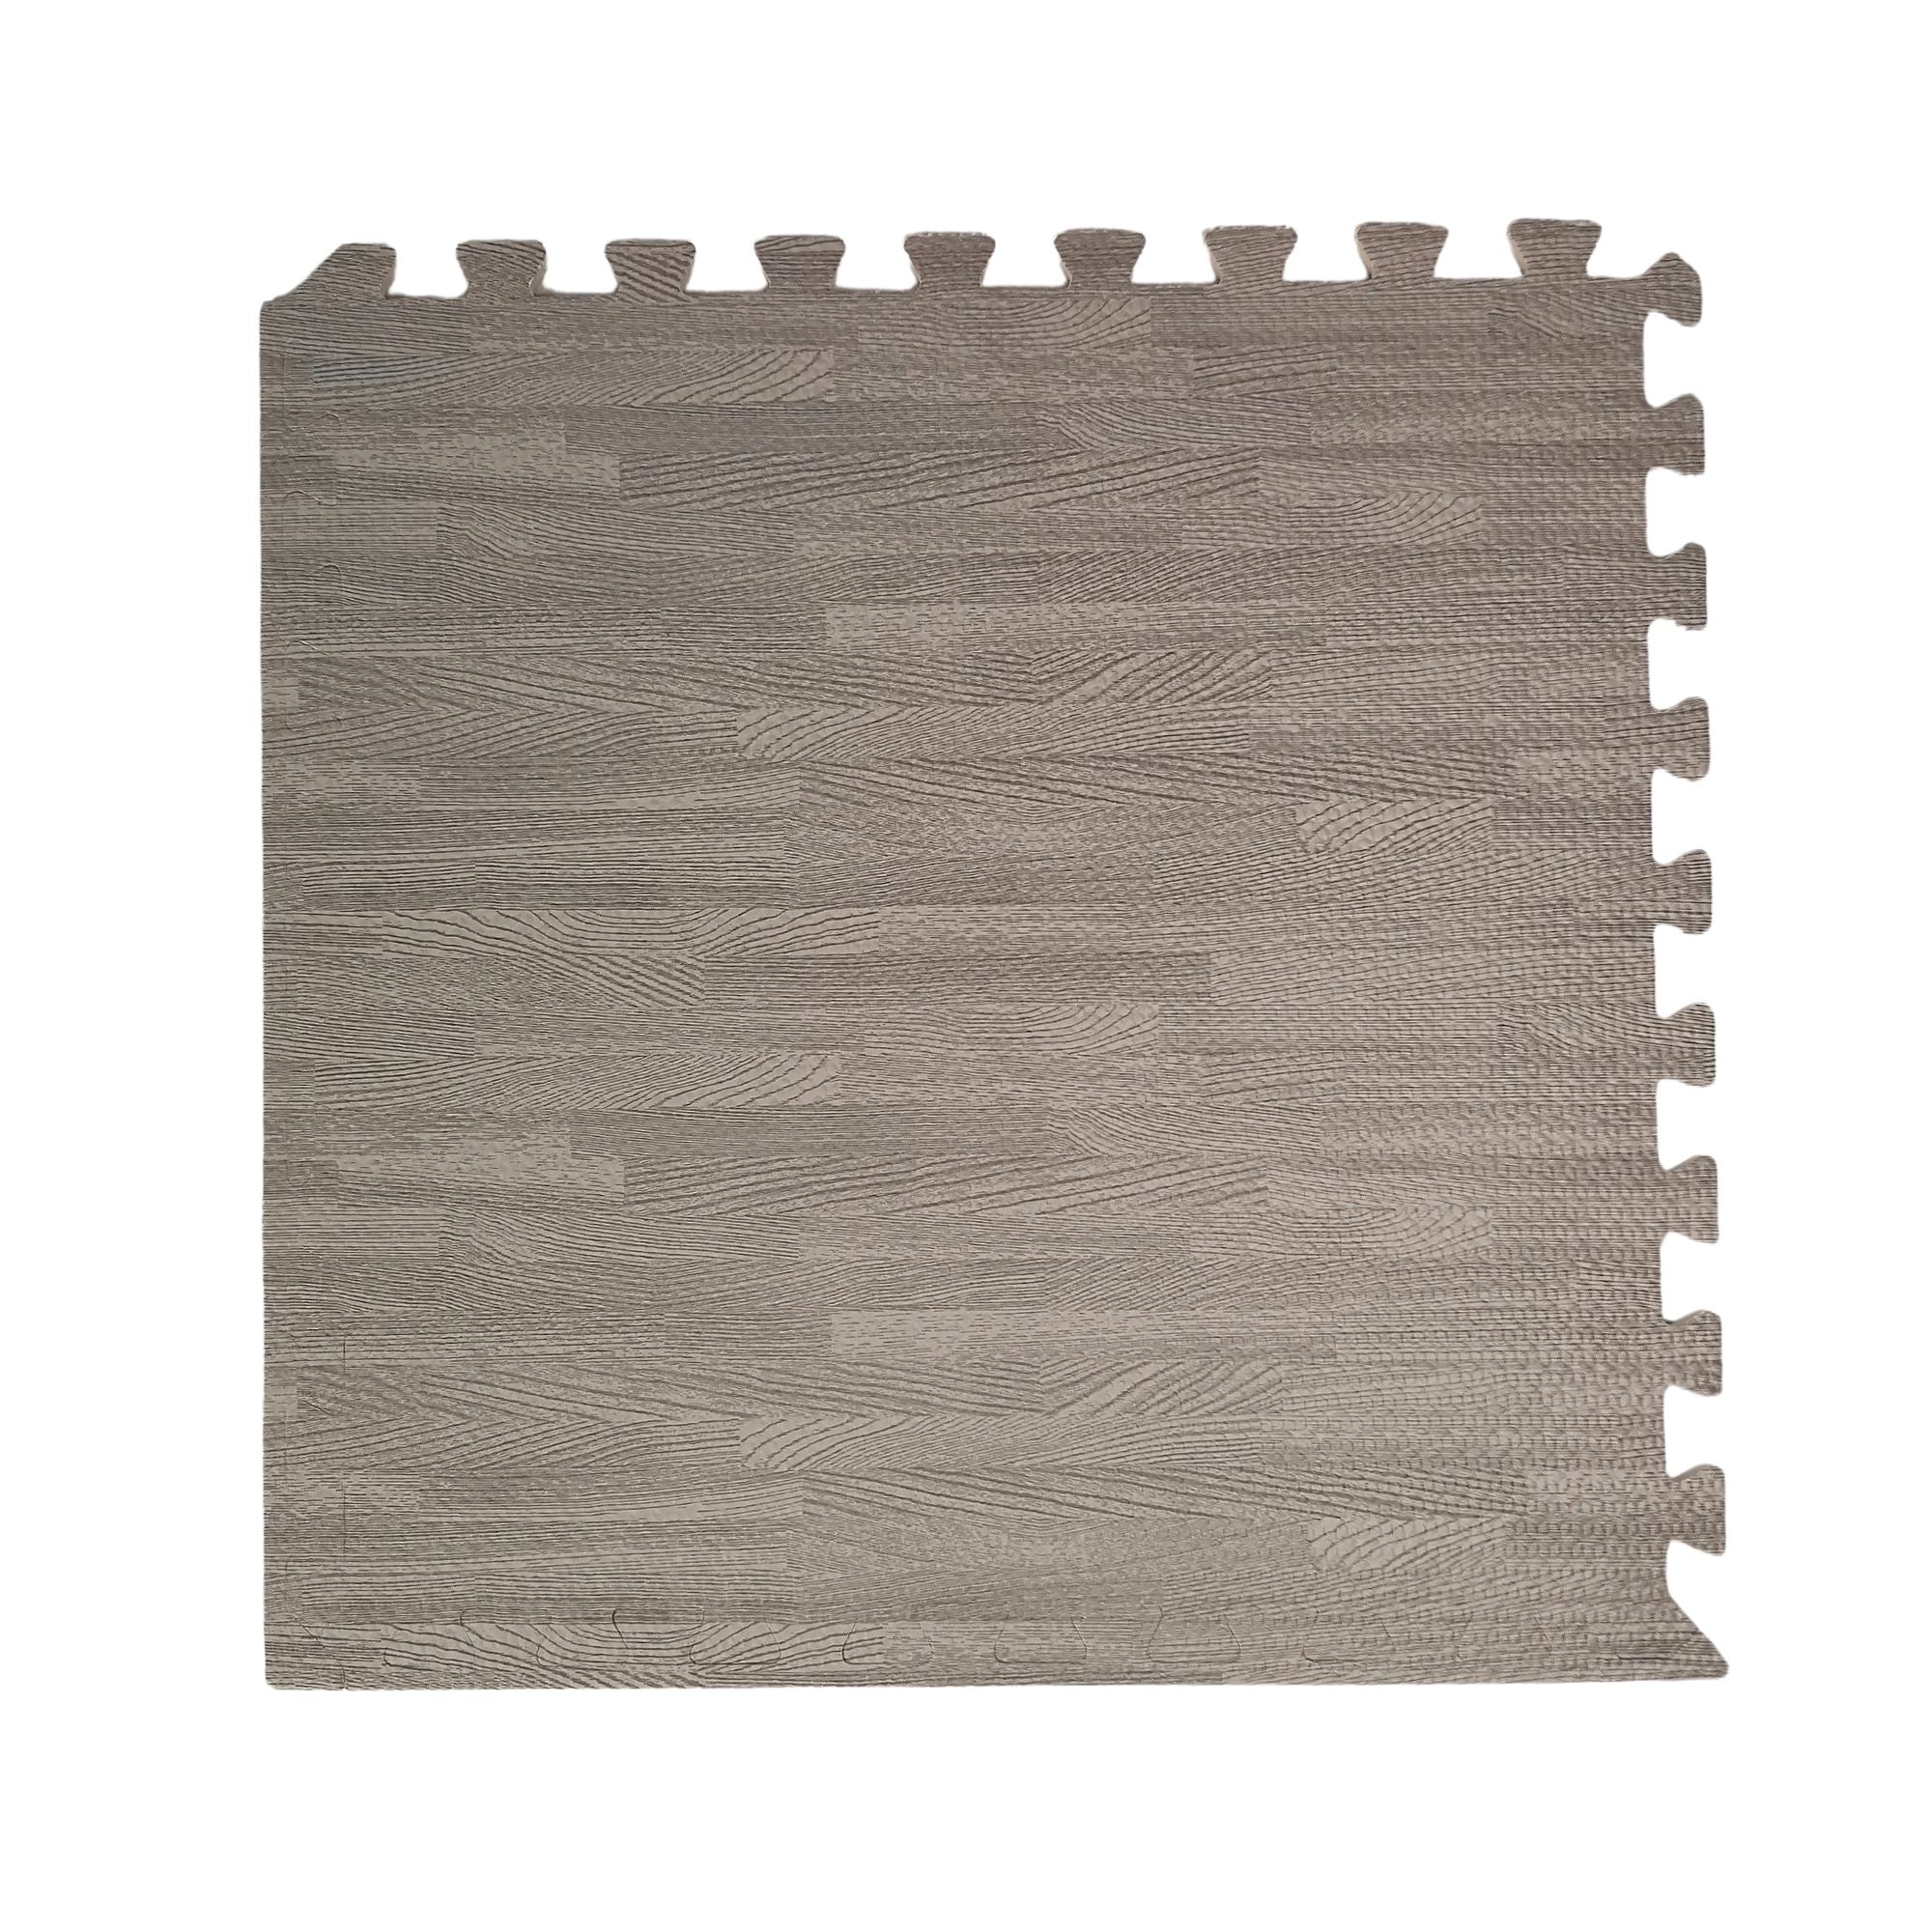 16 Piece Grey Wood Effect EVA Foam Floor Protective Floor Tiles / Mats 60x60cm Each Set For Gyms, Kitchens, Garages, Camping, Kids Play Matting, Floor Mats Set Covers 5.76 sqm (62 sq ft)